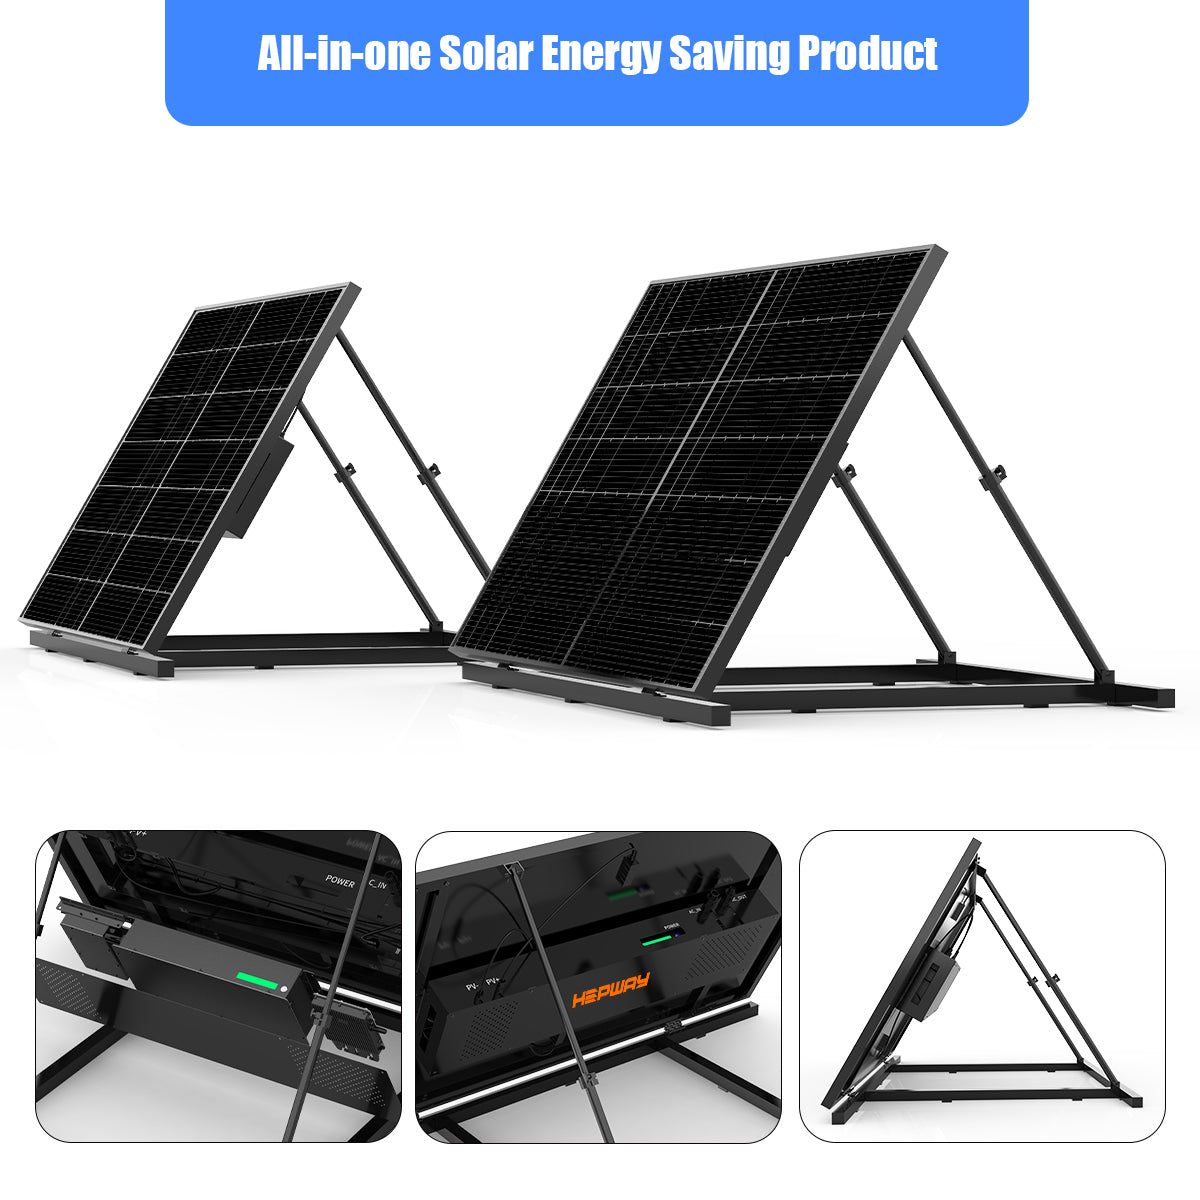 HEPWAY BPIS-1000 All-In-One Solar Storage System